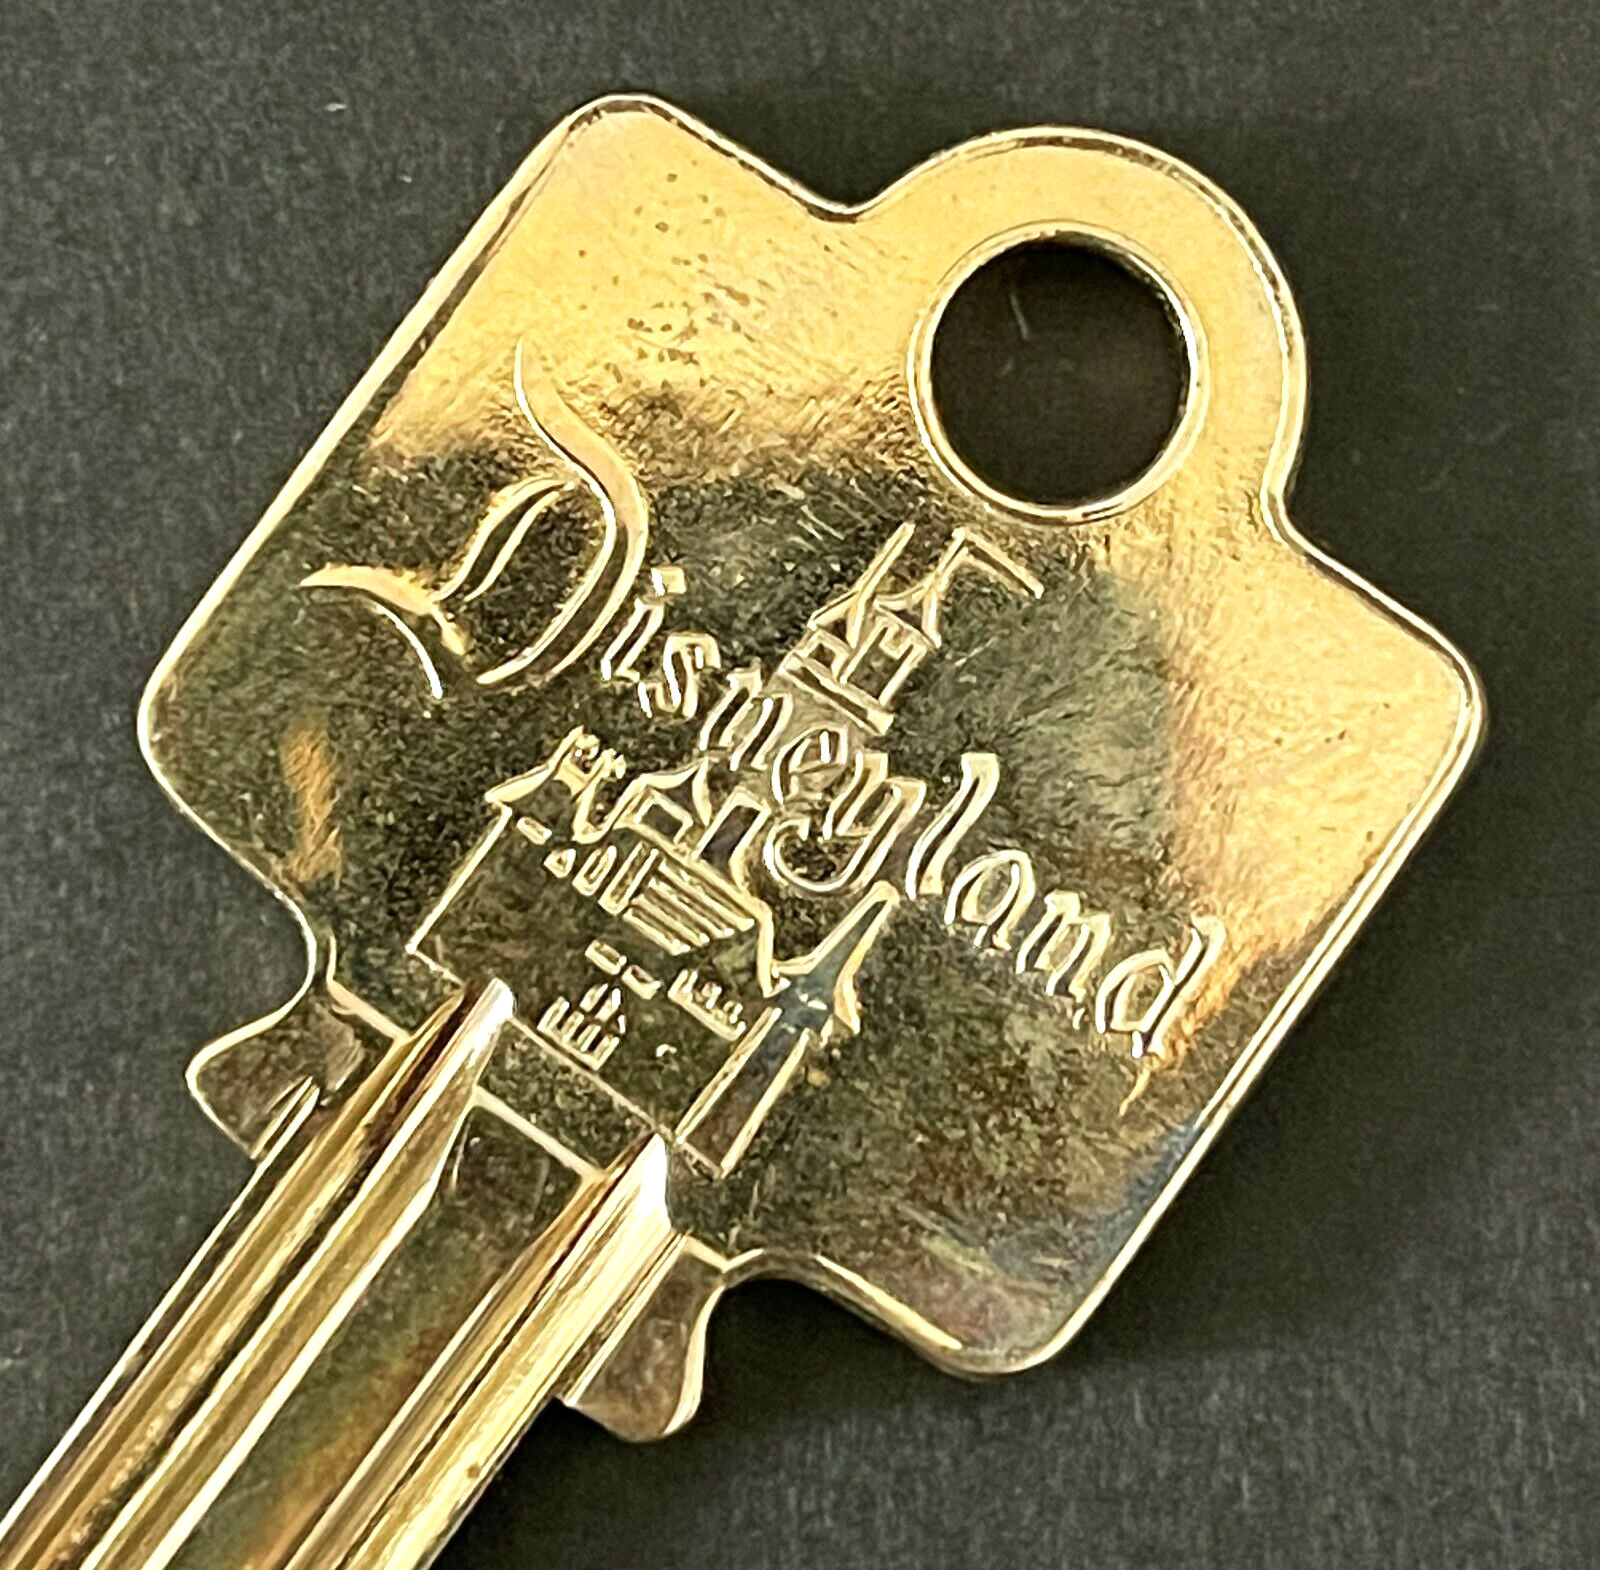 Vintage Disneyland Main Street Uncut Yale Lock Shop Gold Tone Key July 17, 1955